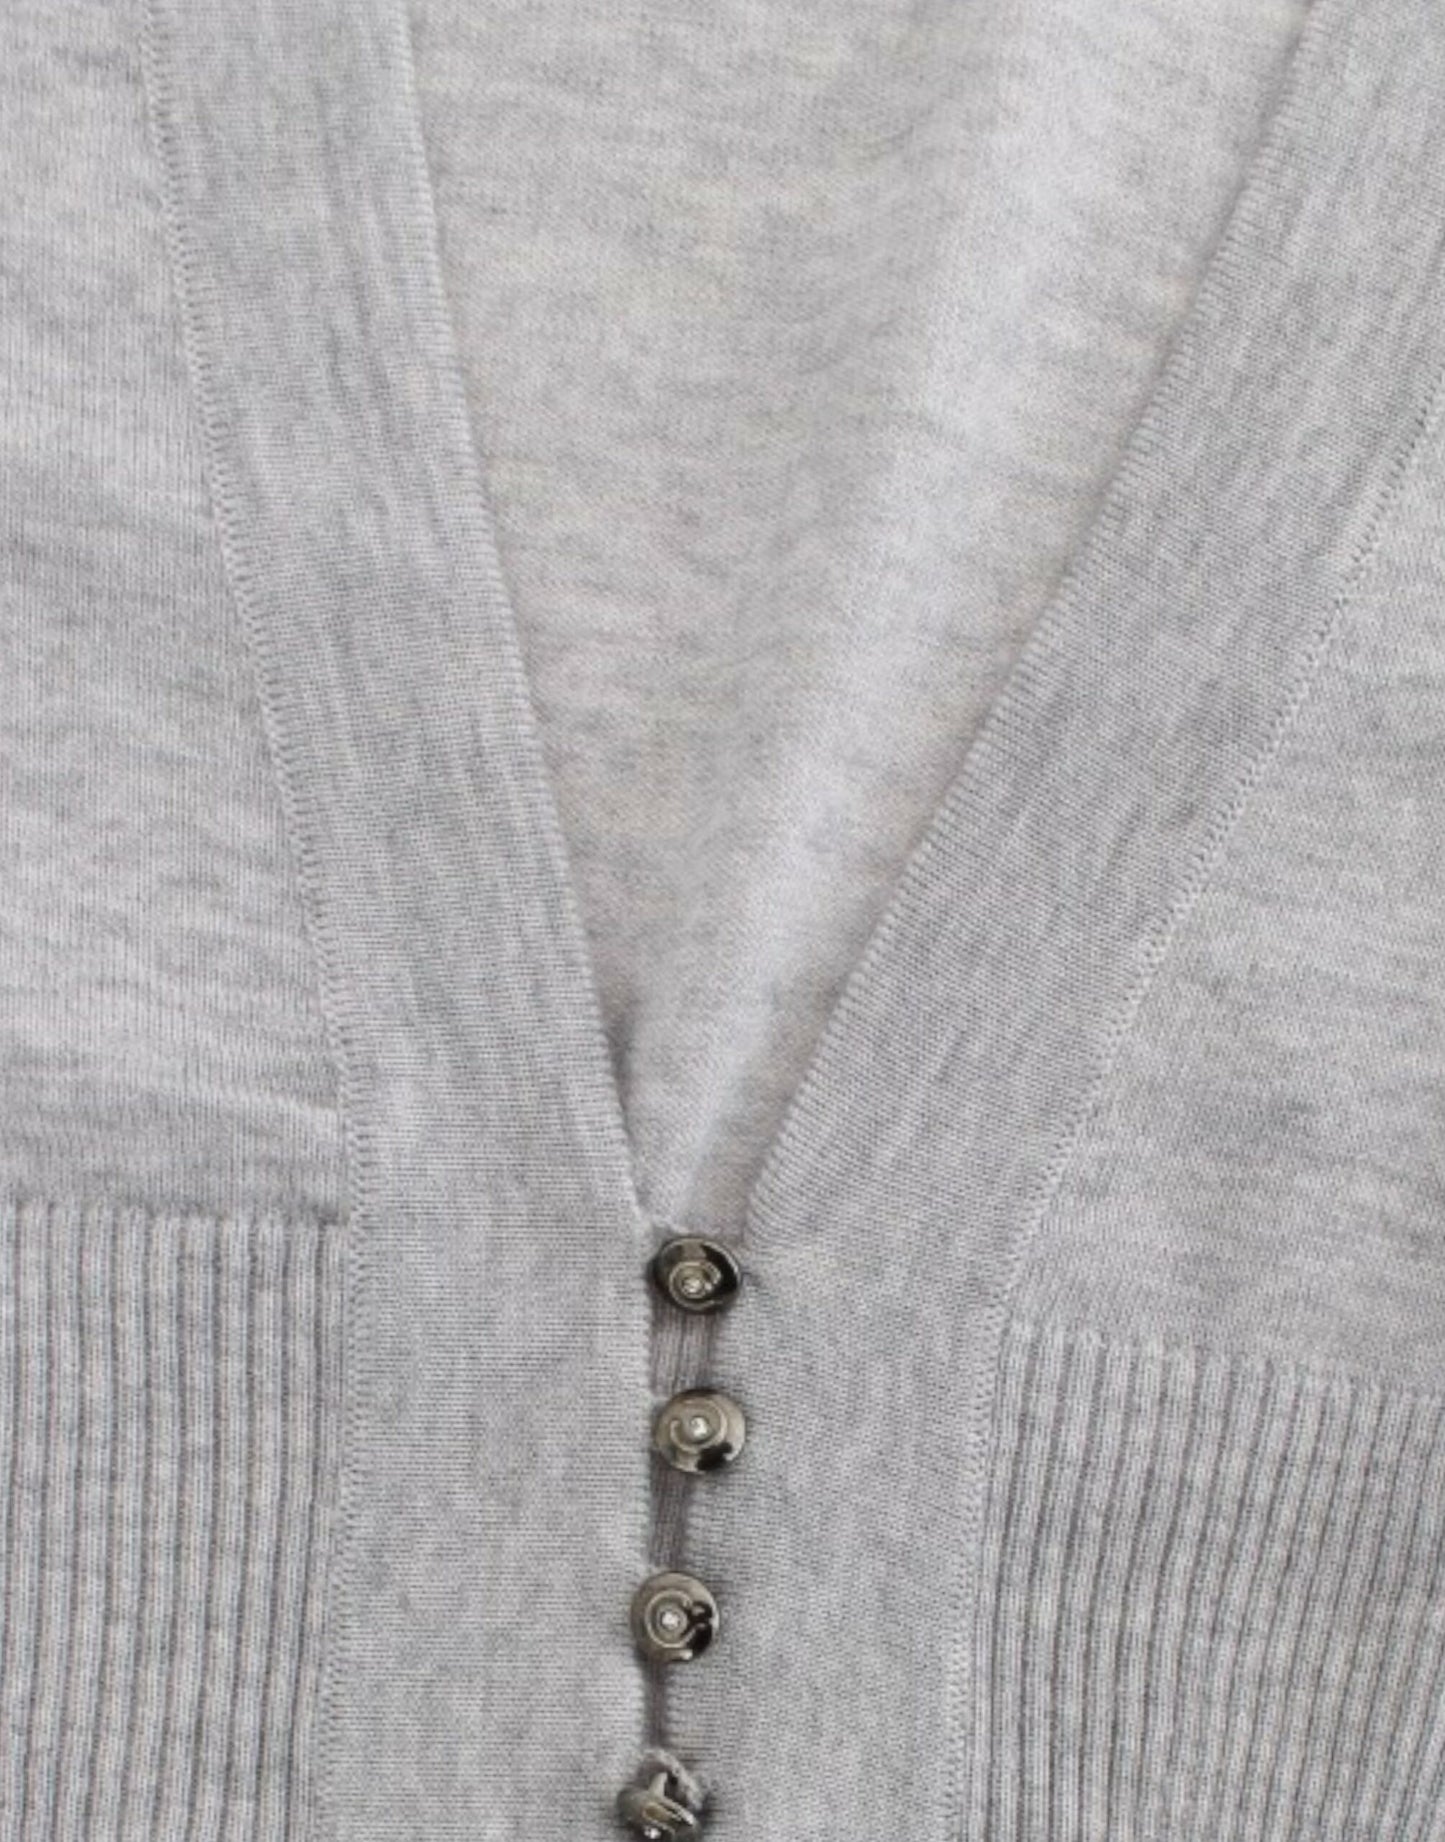 Cavalli Gray cropped wool cardigan